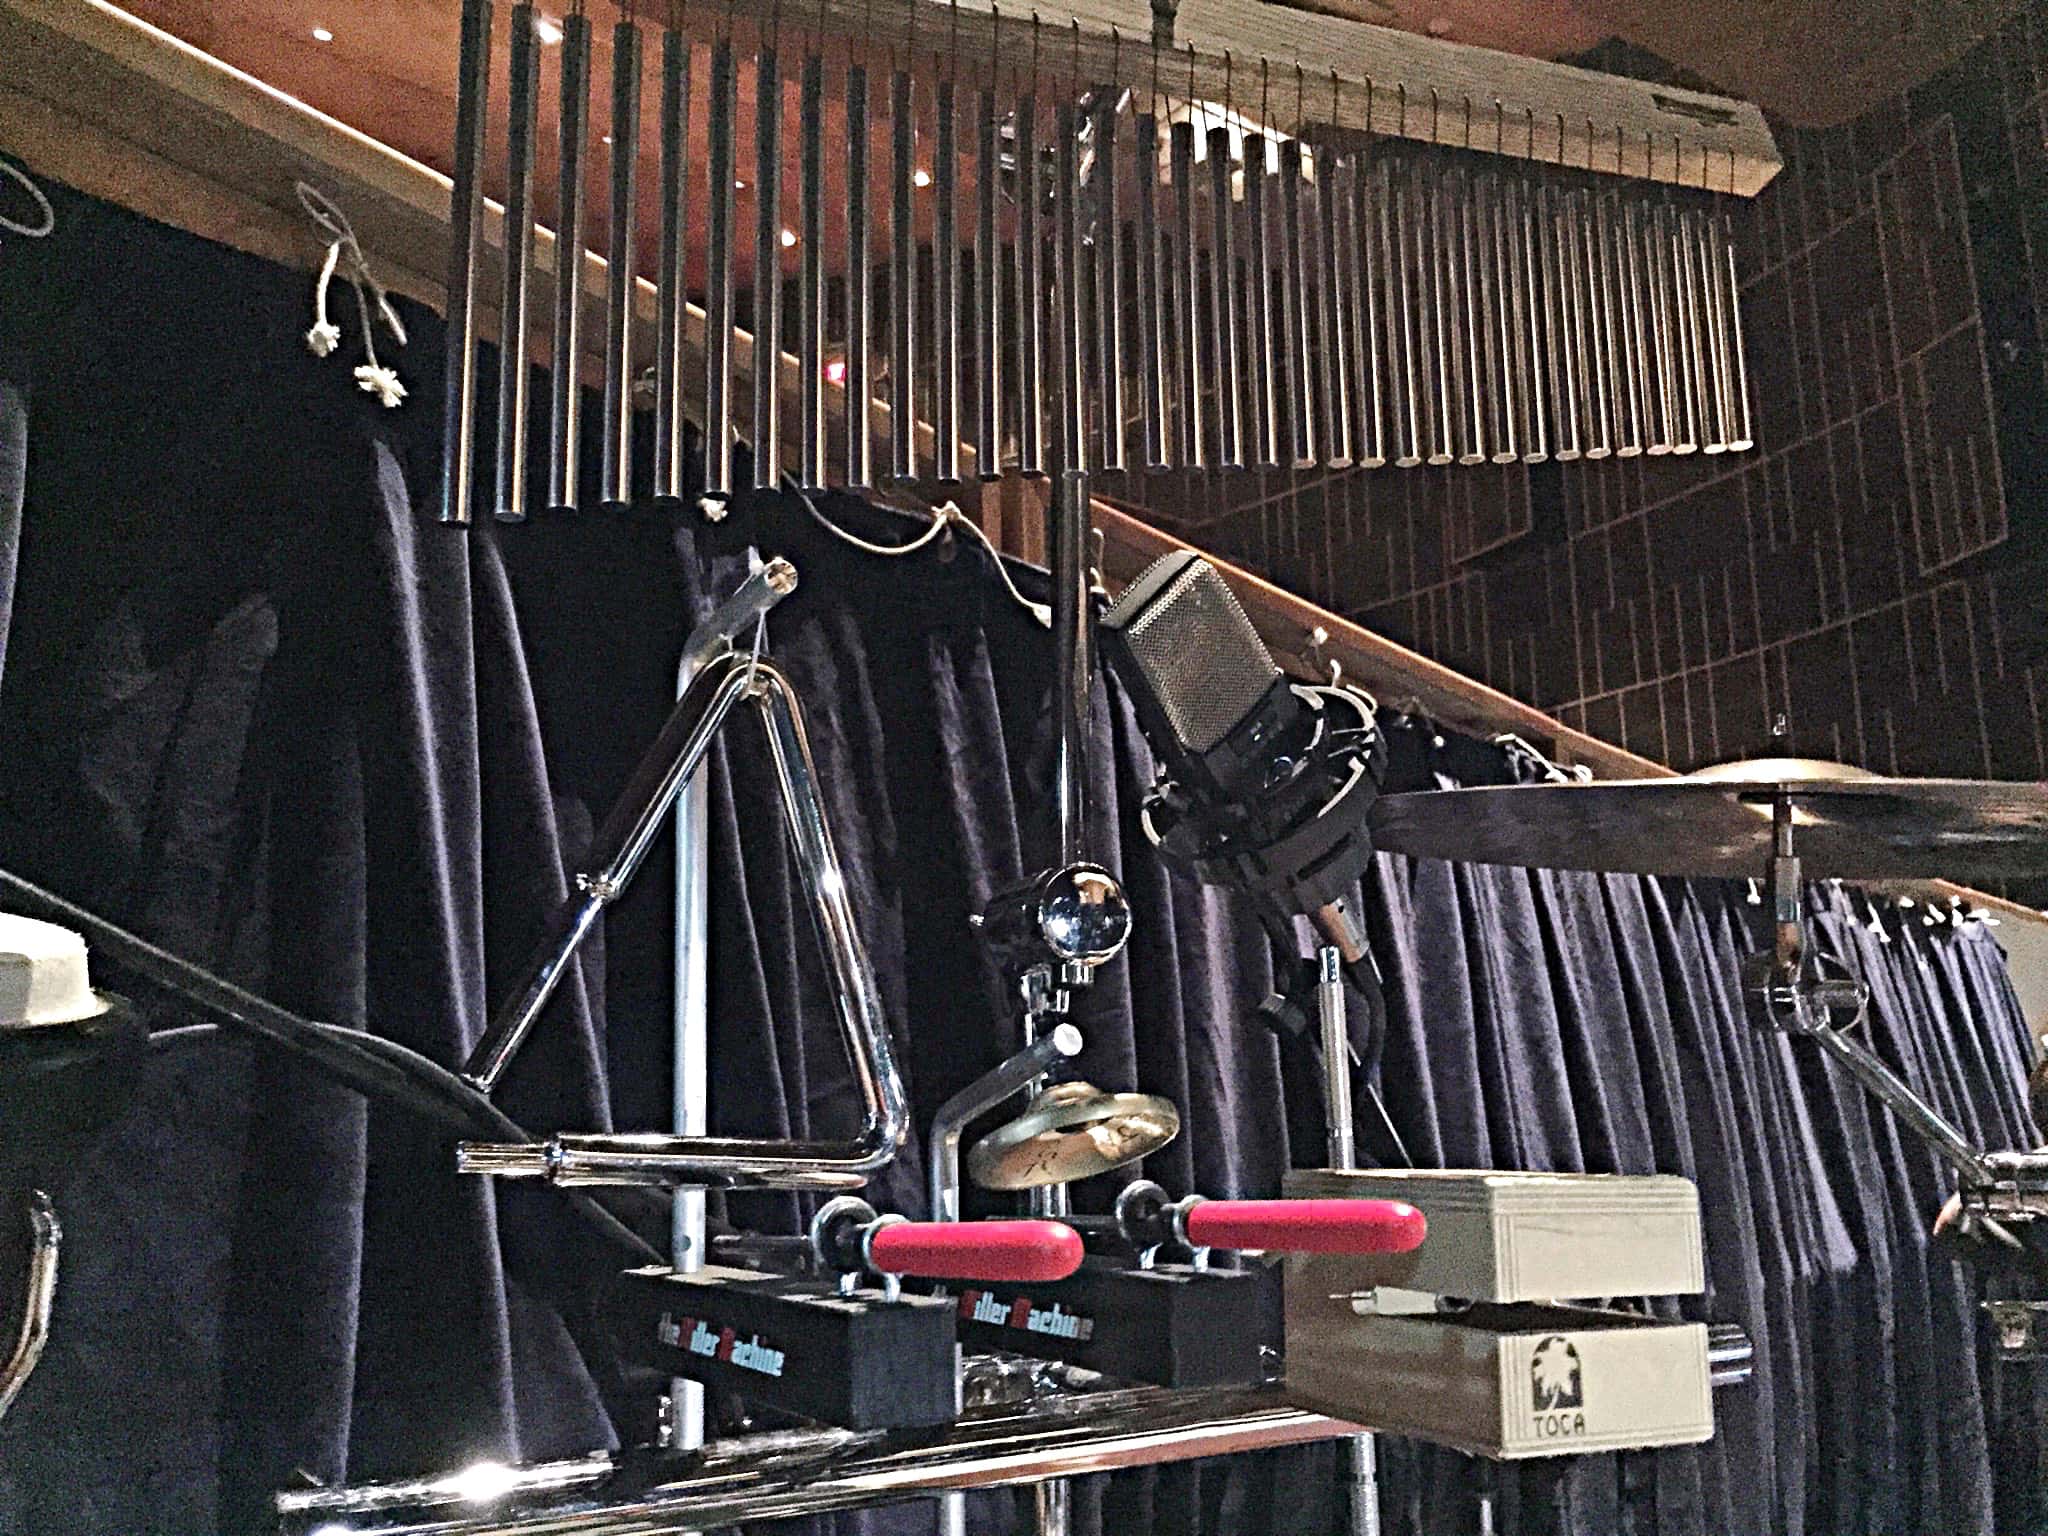 Jaren Angud's percussion setup for Les Miserables at the Eisenhower Auditorium at Penn State University in University Park, Pennsylvania.